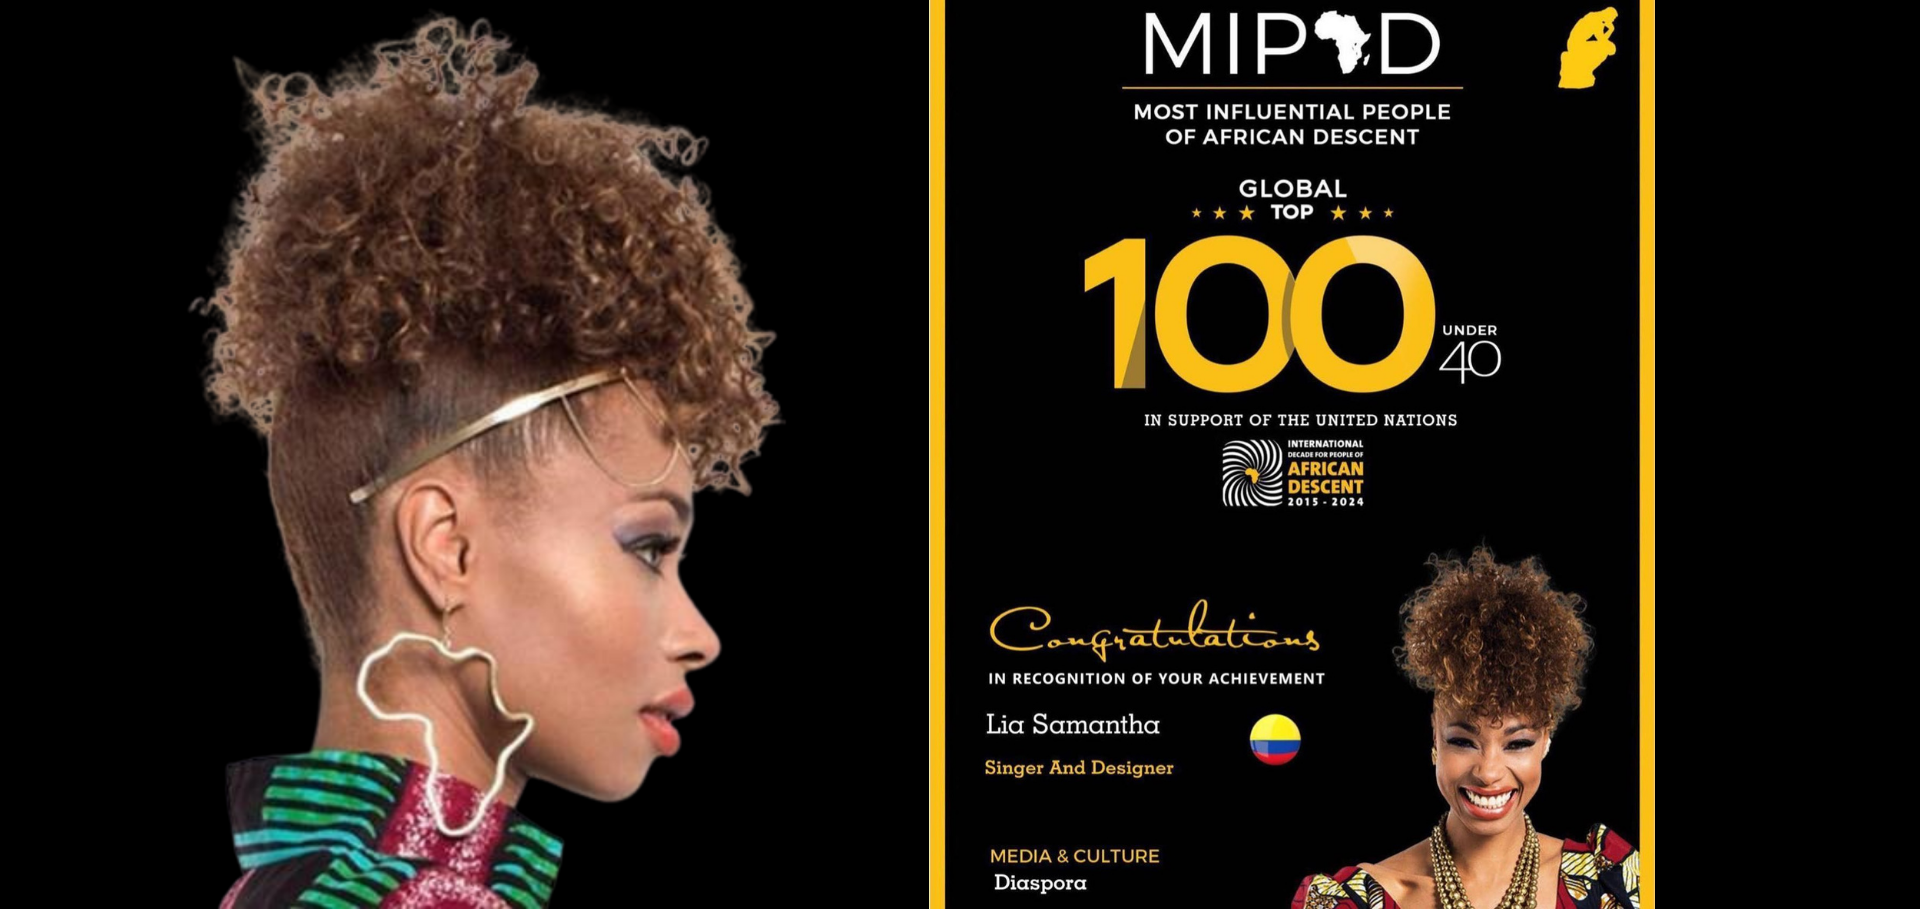 Lia Samantha MIPAD Global 100 Leaders